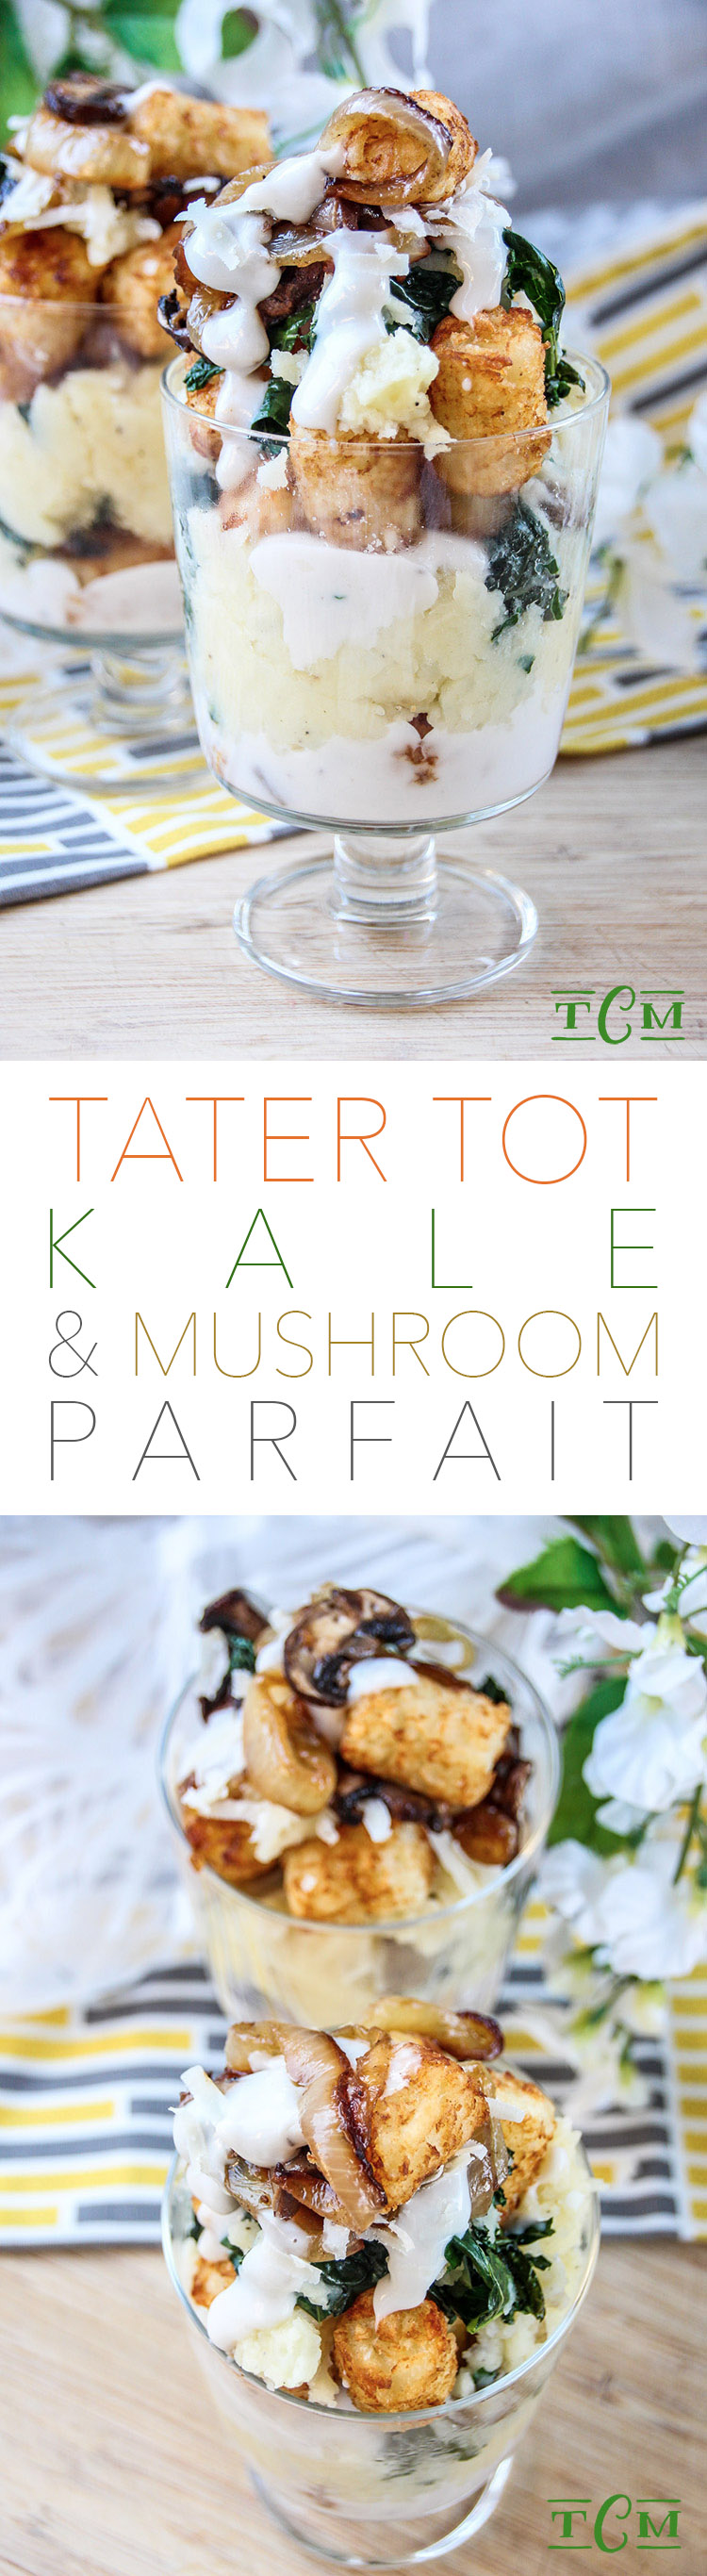 http://thecottagemarket.com/wp-content/uploads/2017/03/Tater-Tot-Potatoes-Kale-Parfait-tower-1.jpg